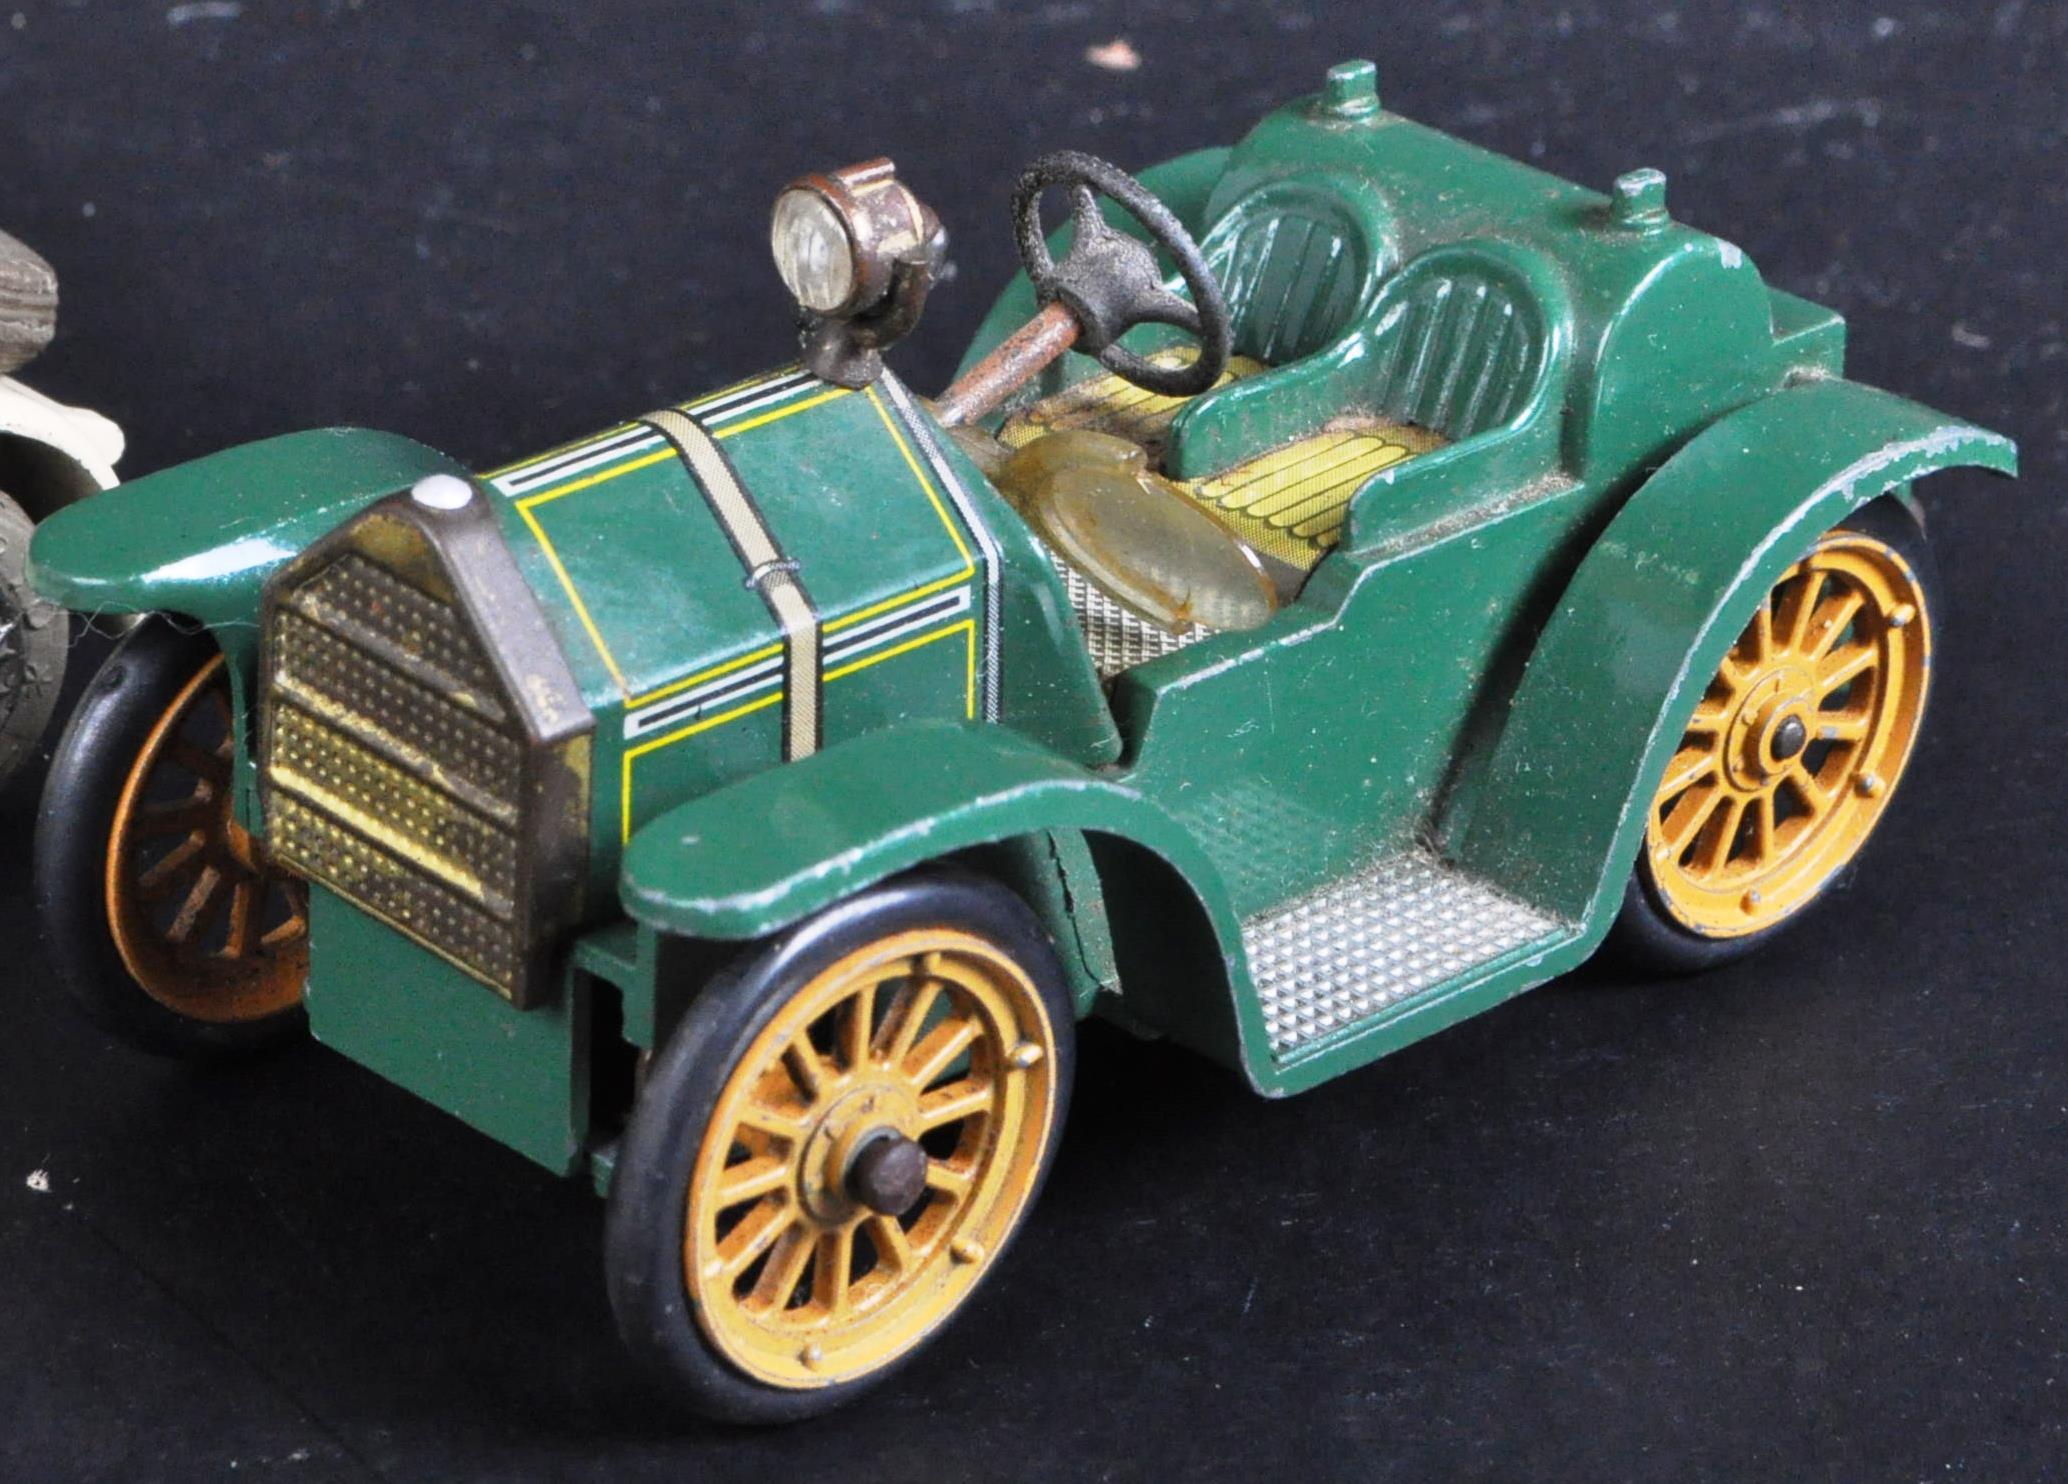 TWO ORIGINAL VINTAGE GERMAN SCHUCO CLOCKWORK MICRO RACER CARS - Image 3 of 4